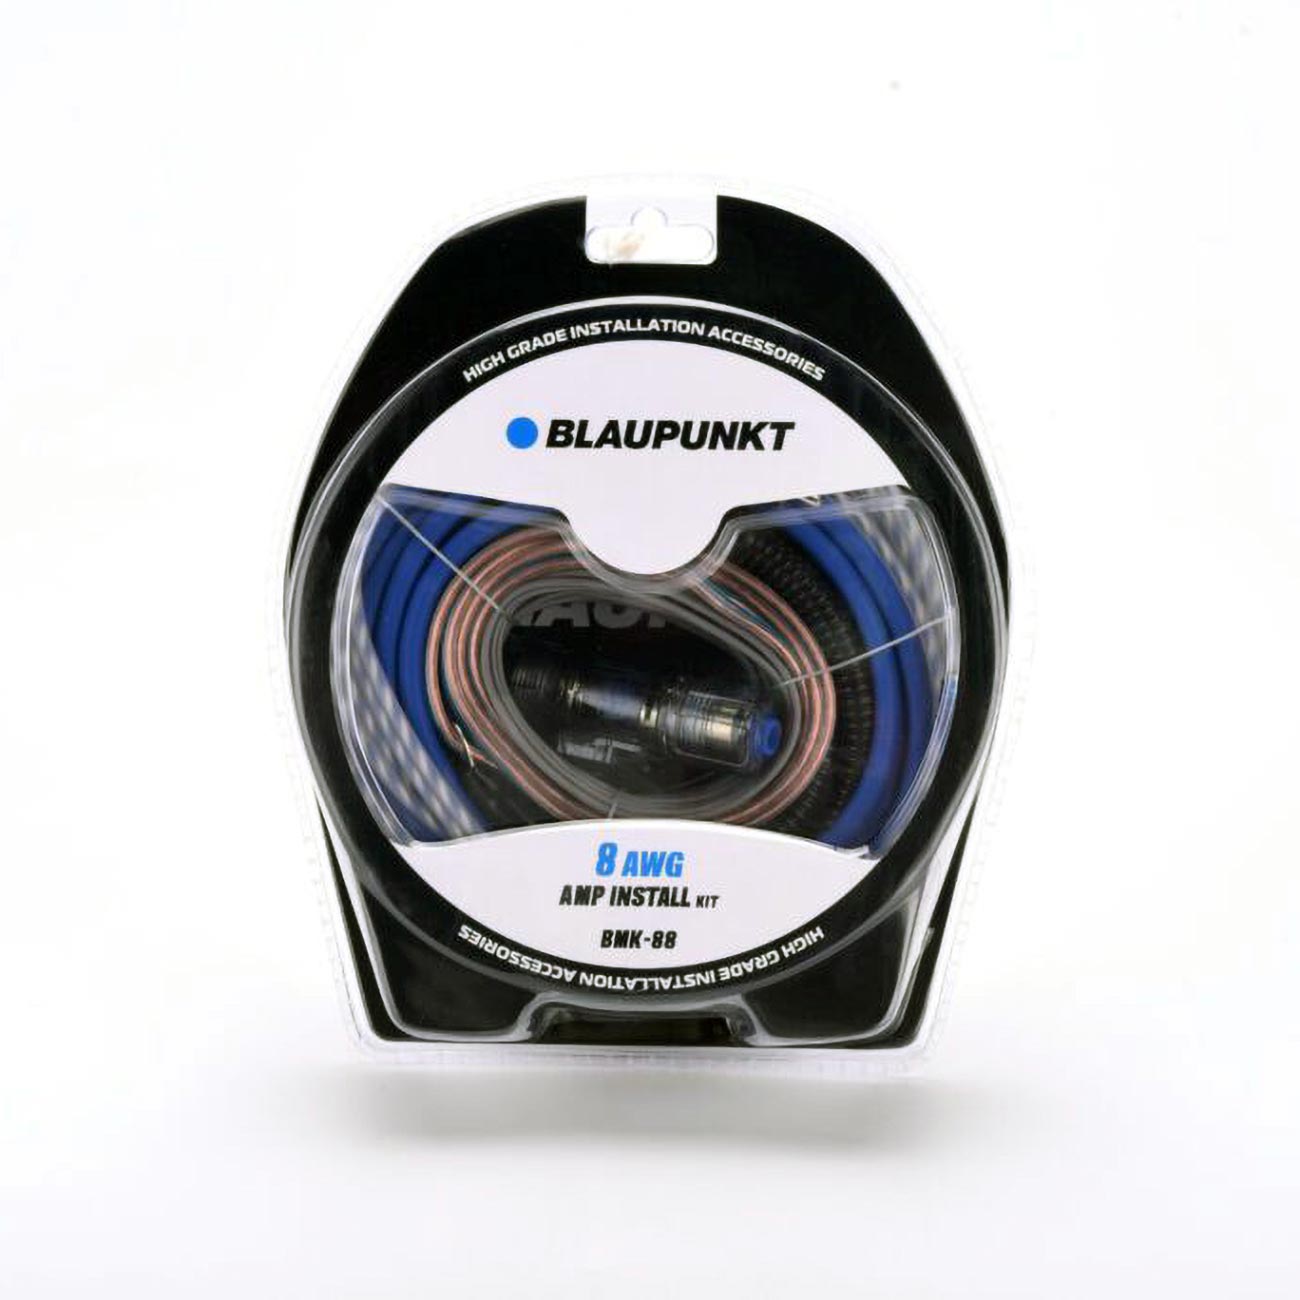 Blaupunkt Complete 8 Gauge Amplifier Kit